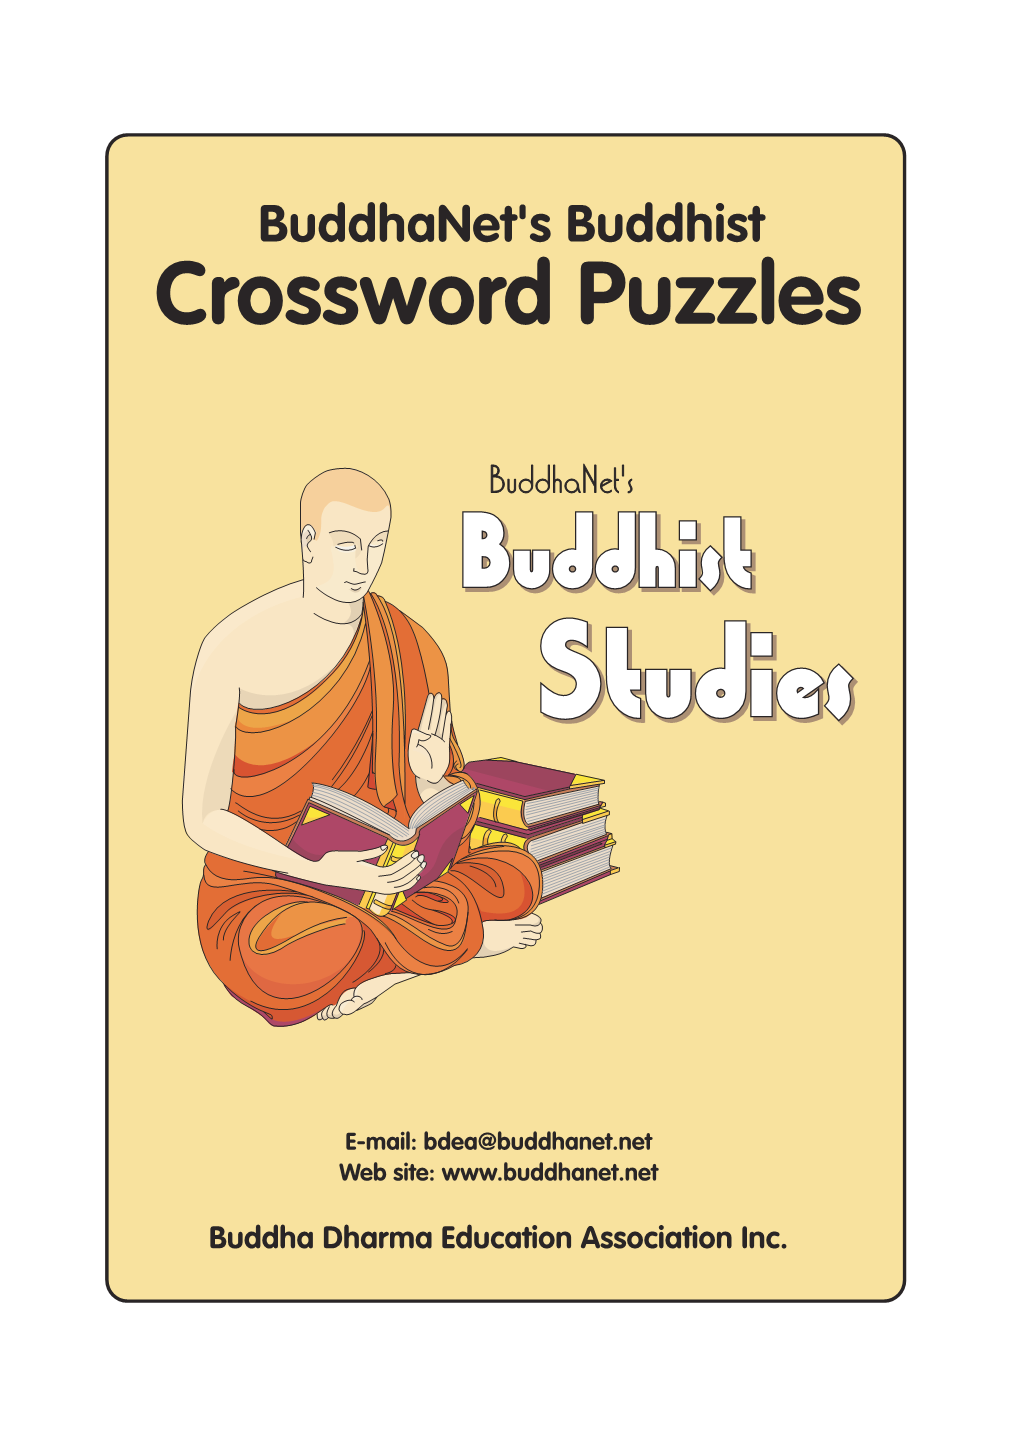 Buddhanet's Buddhist Crossword Puzzles